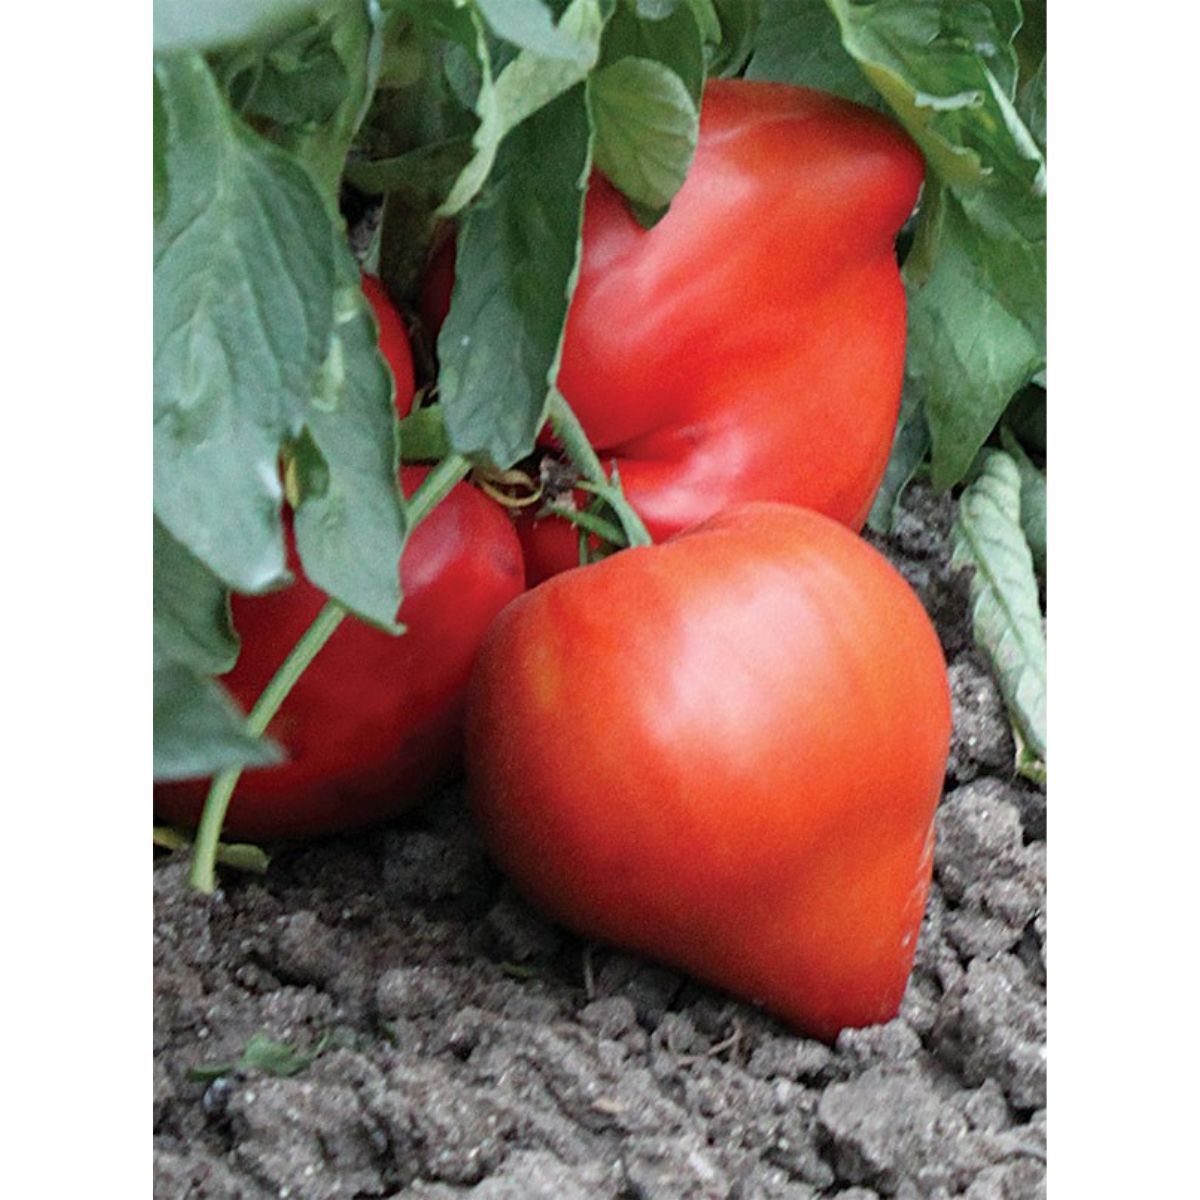 Tomate - Seminte de tomate Lacrima Fecioarei (Momini salzi), 0.2 grame FLORIAN, hectarul.ro